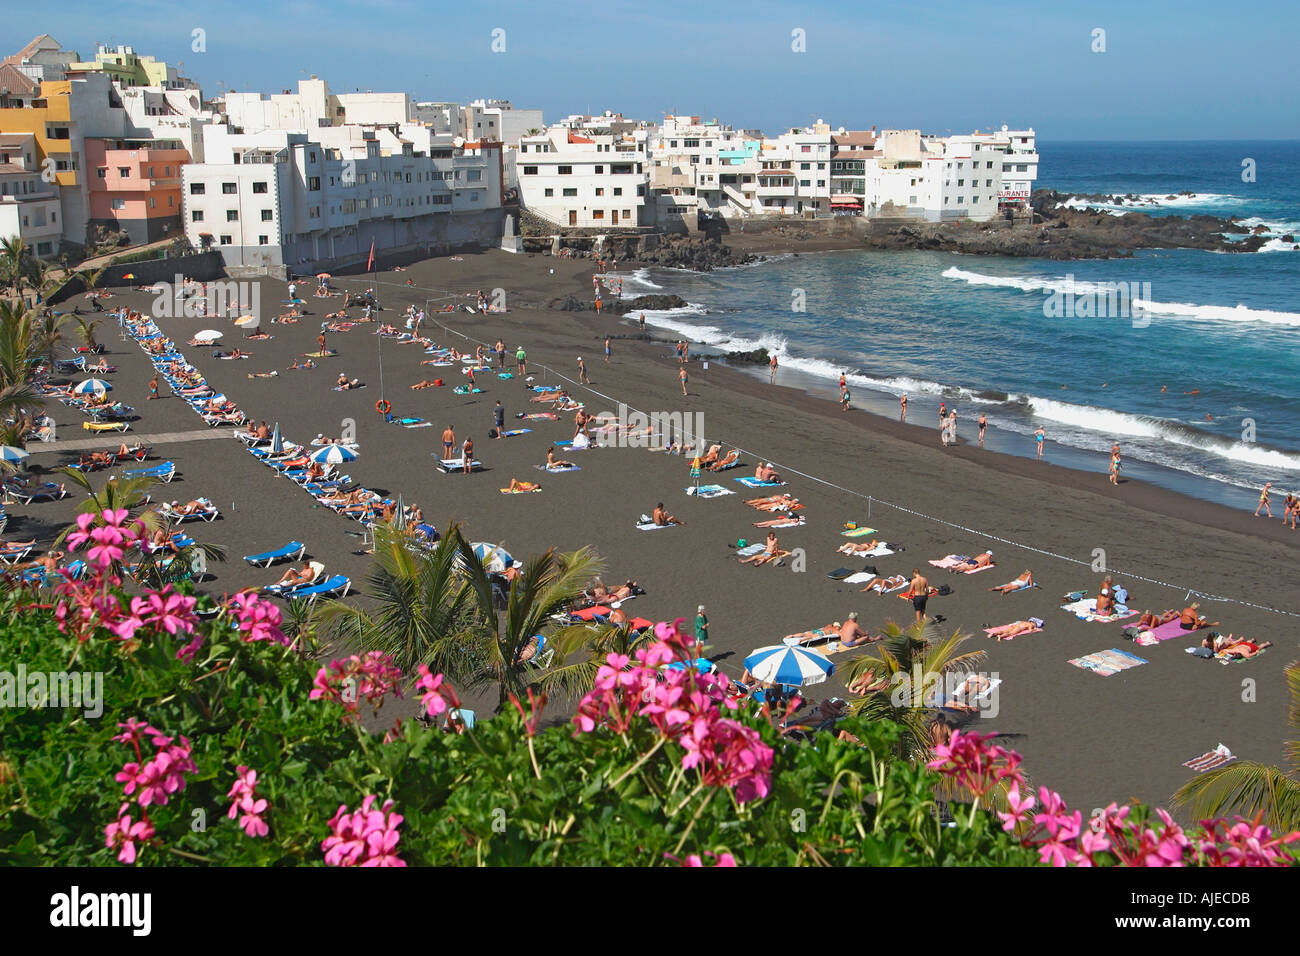 Playa Jardin beach, Puerto de la Cruz, Tenerife, Canary islands, Spain  Stock Photo - Alamy